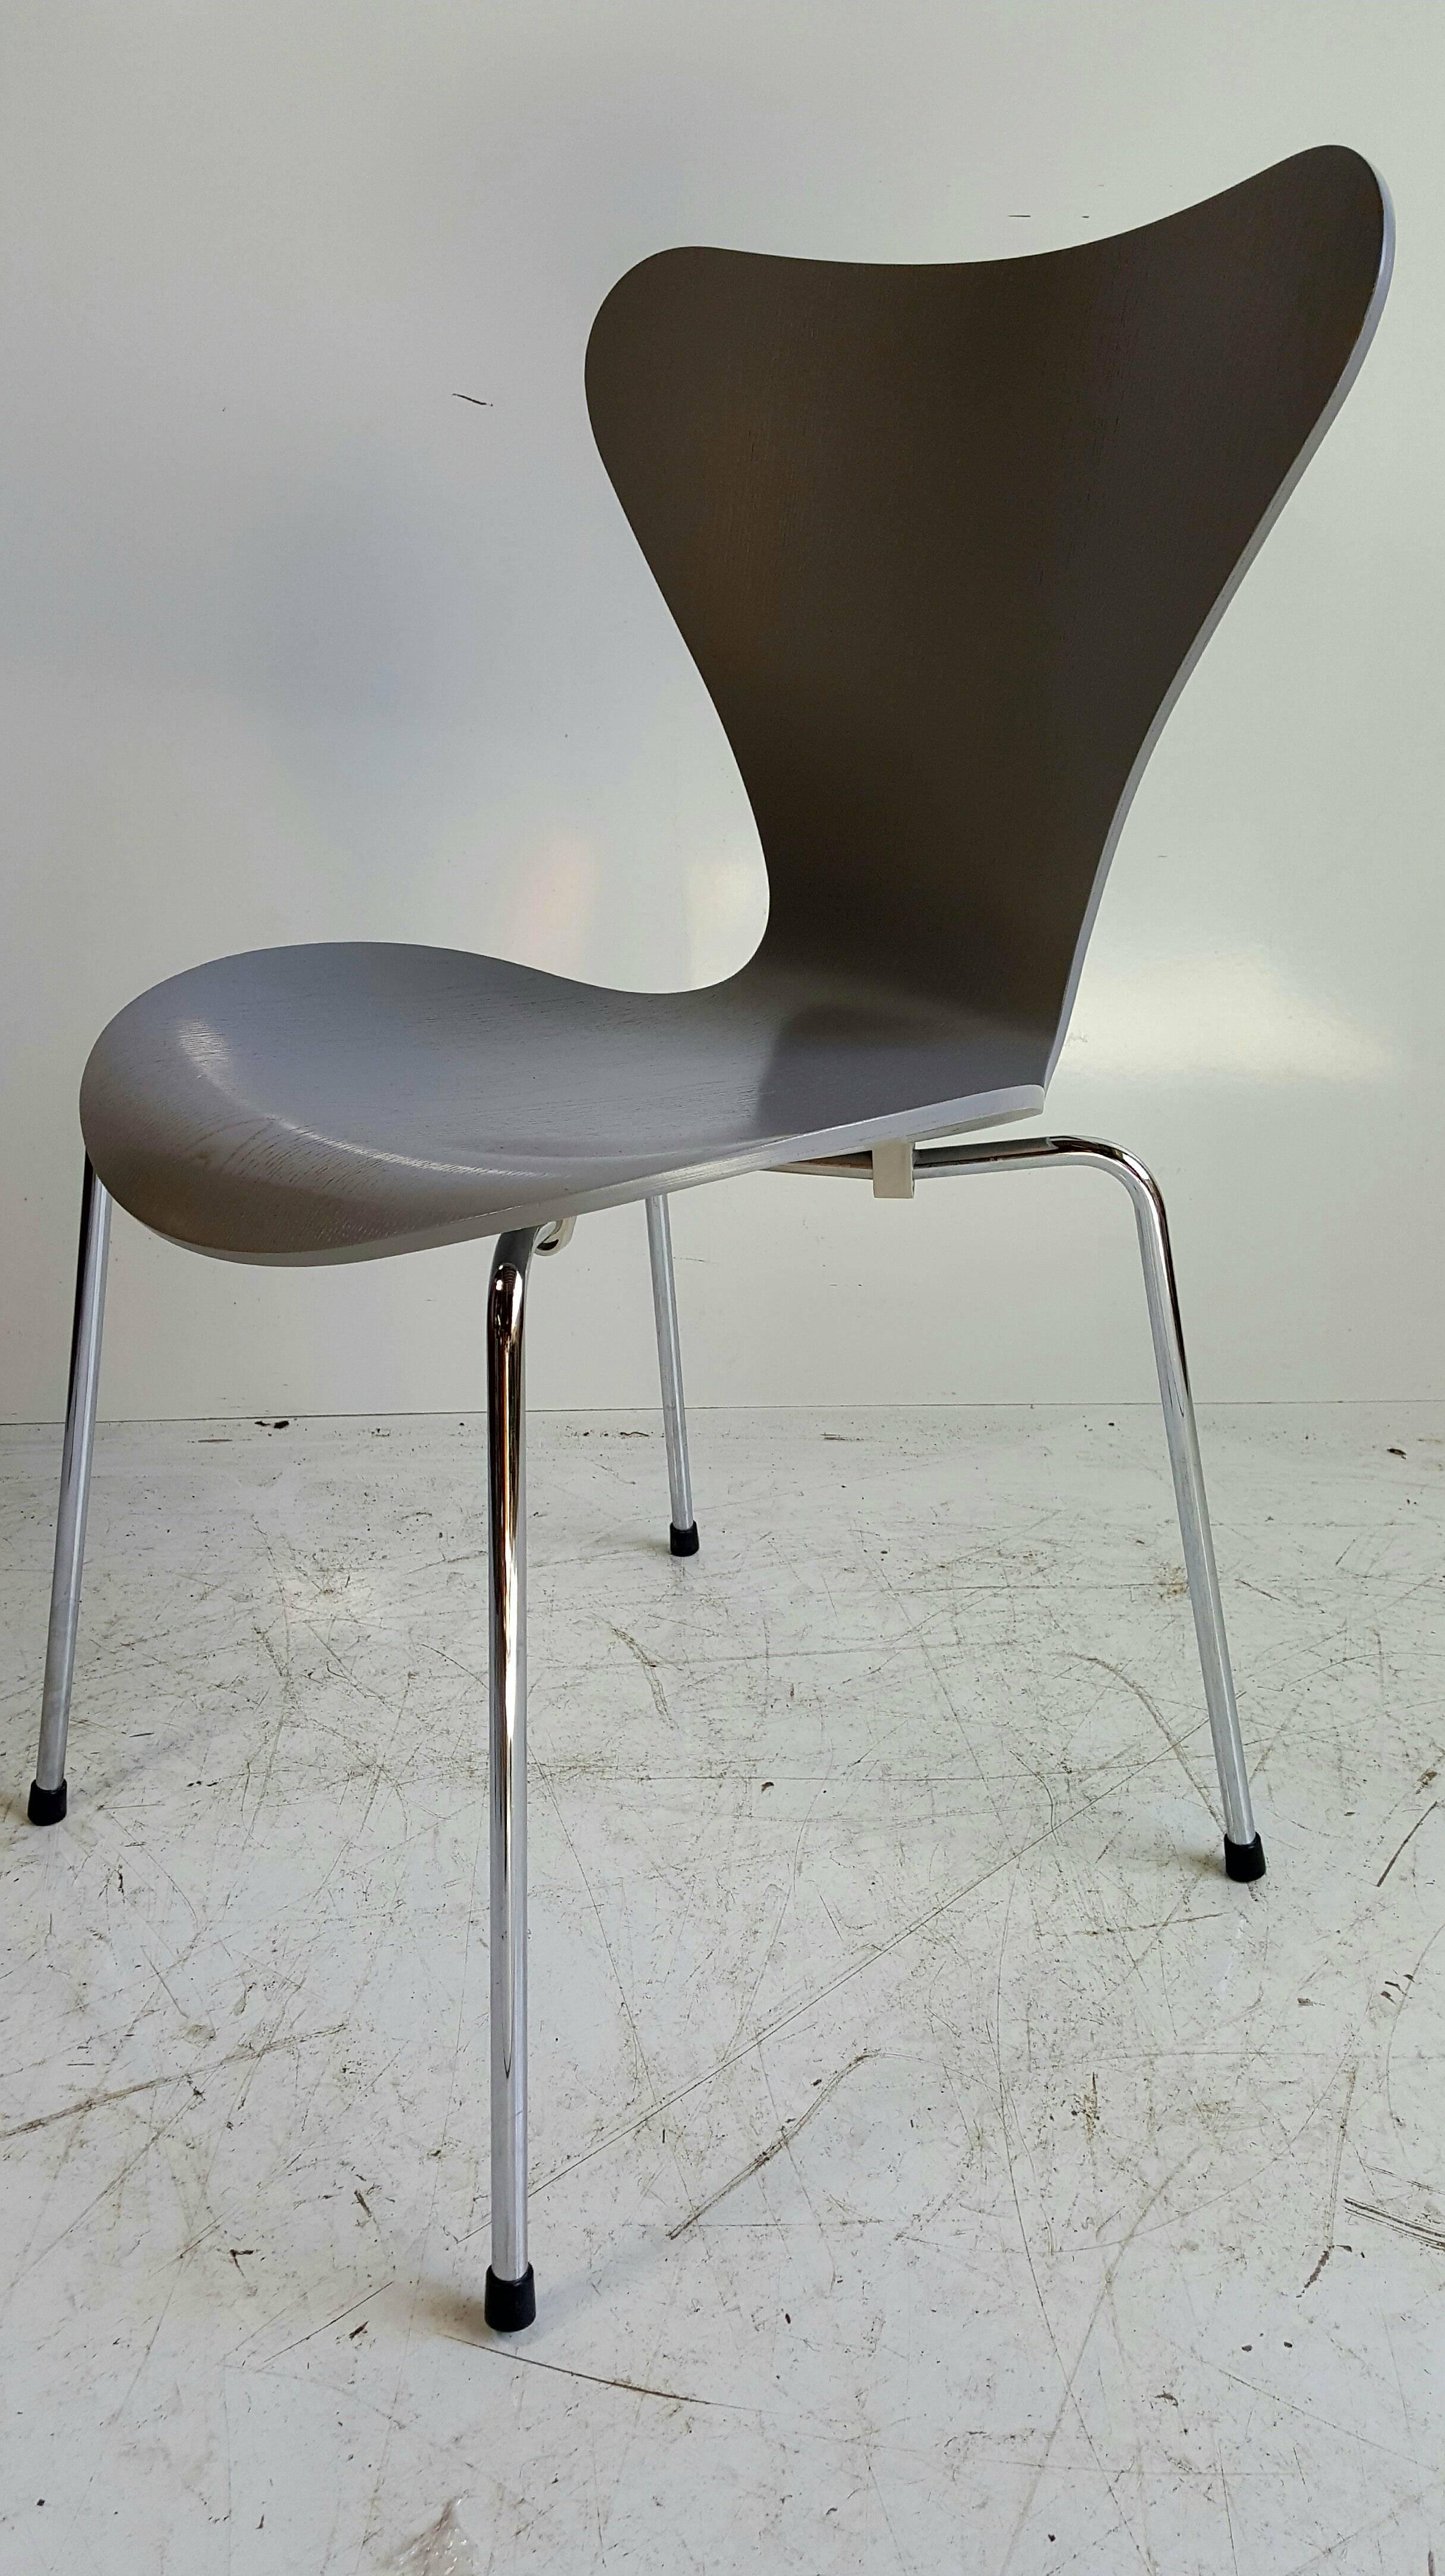 Mid-Century Modern Scandinavian chairs model 7 by Arne Jacobsen. Produced by Fritz Hansen / Knoll chromed steel legs. Classic 1955 design, original light grey painted finish.